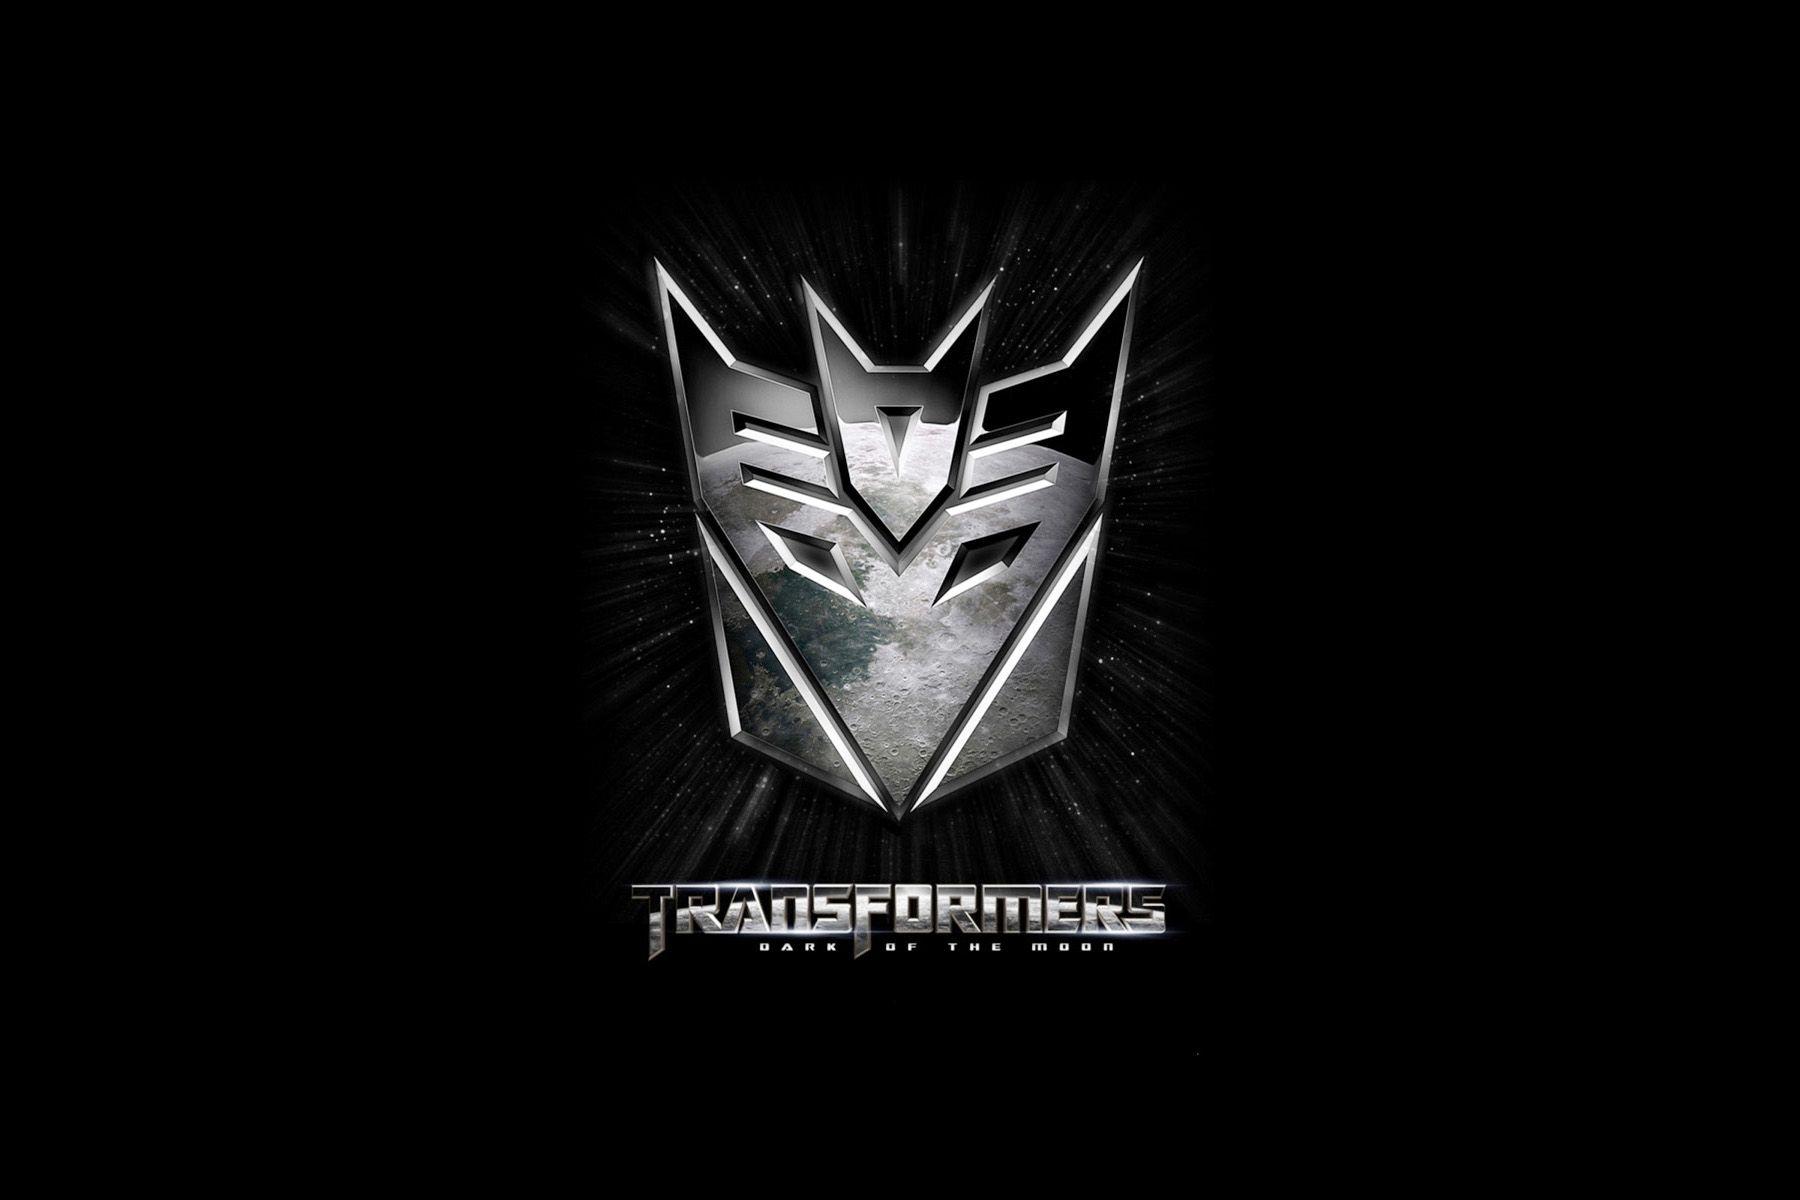 Transformers 4 Logo - Transformers 3 logo decepticons windows